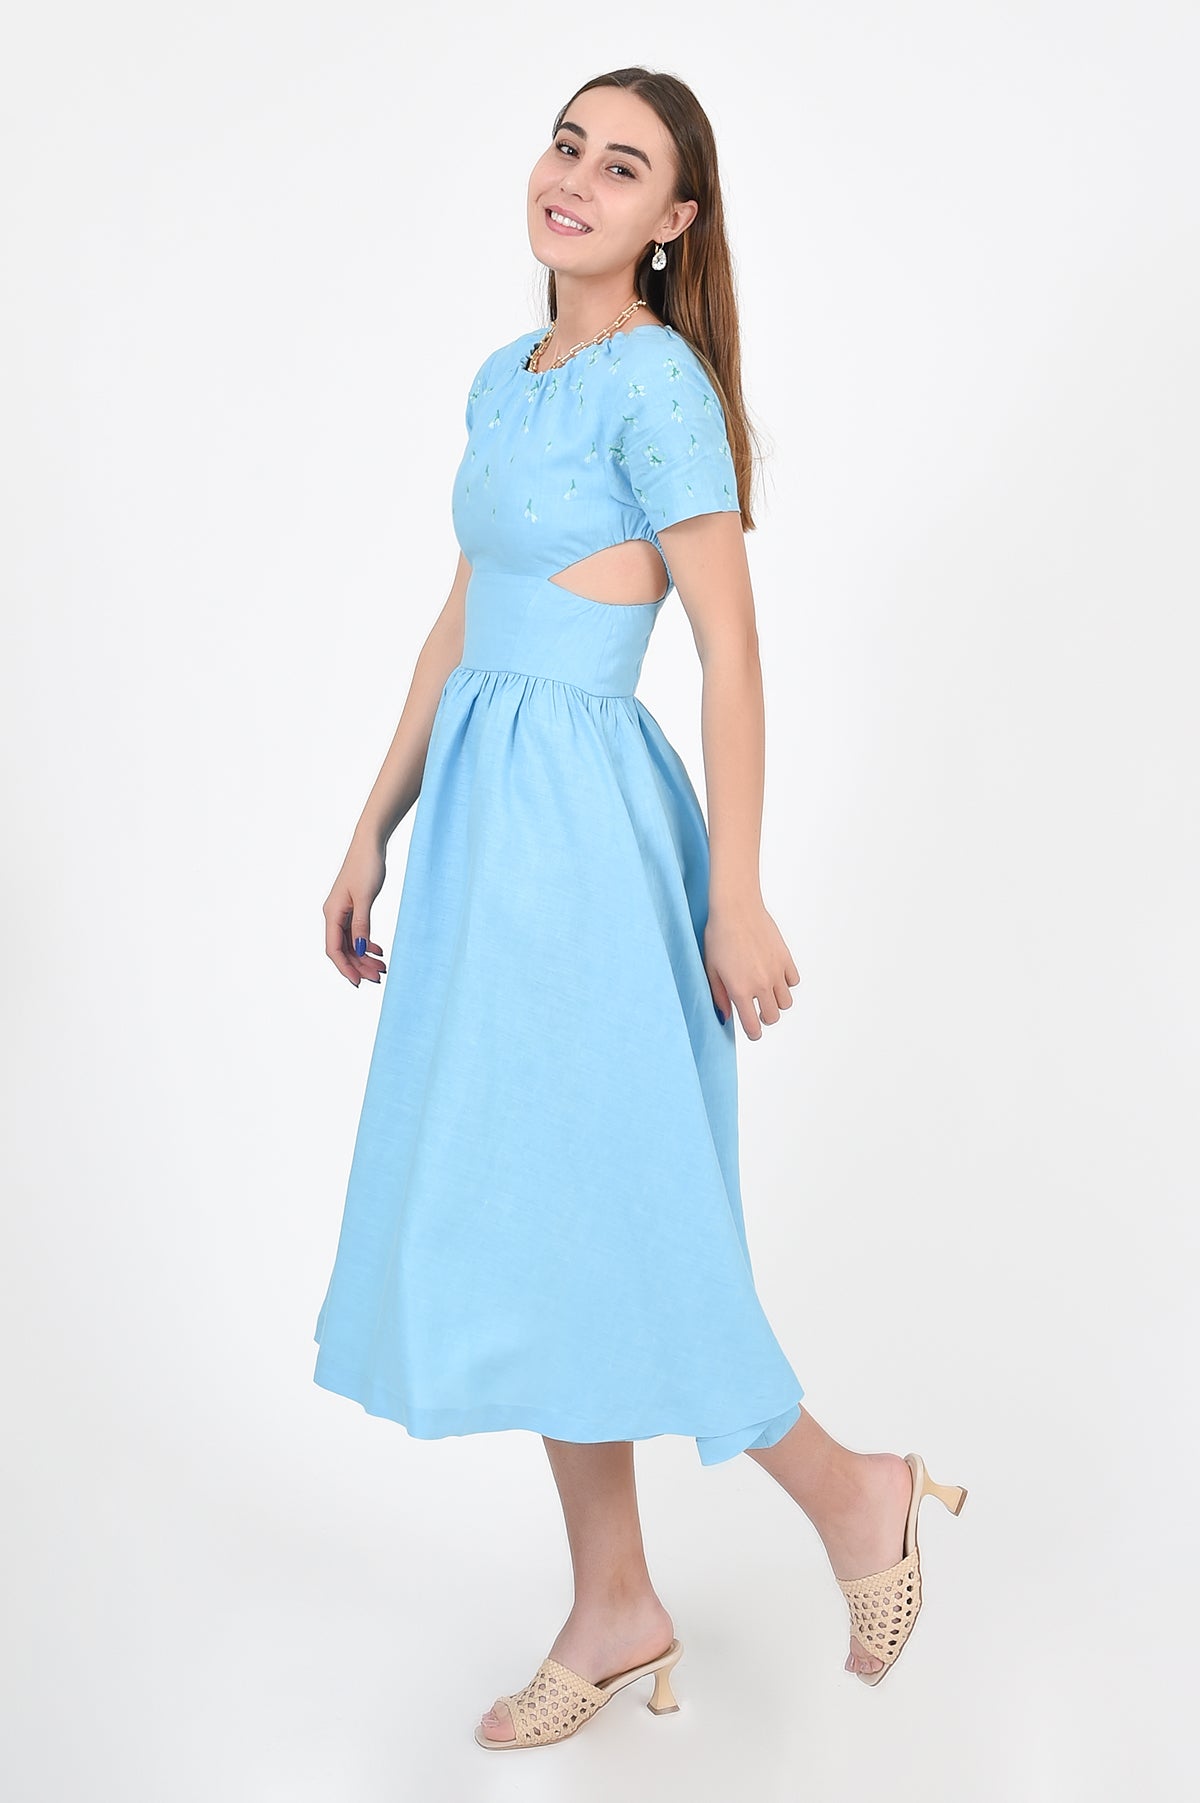 Tucce Linen Dress, Side view, showcasing side cutout details.